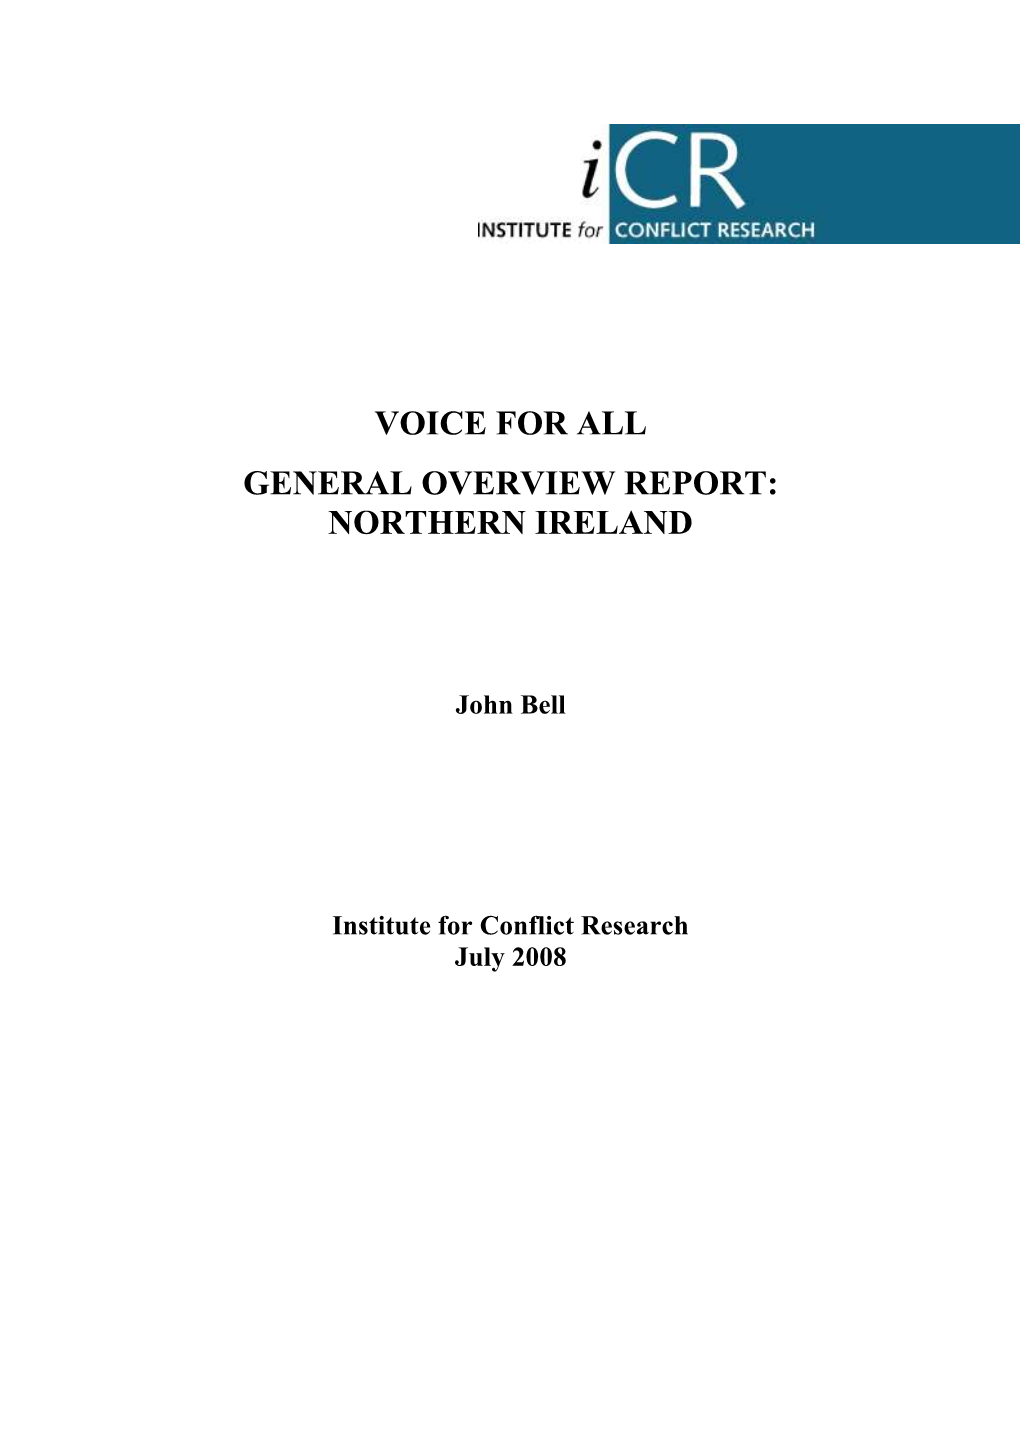 General Overview Report: Northern Ireland